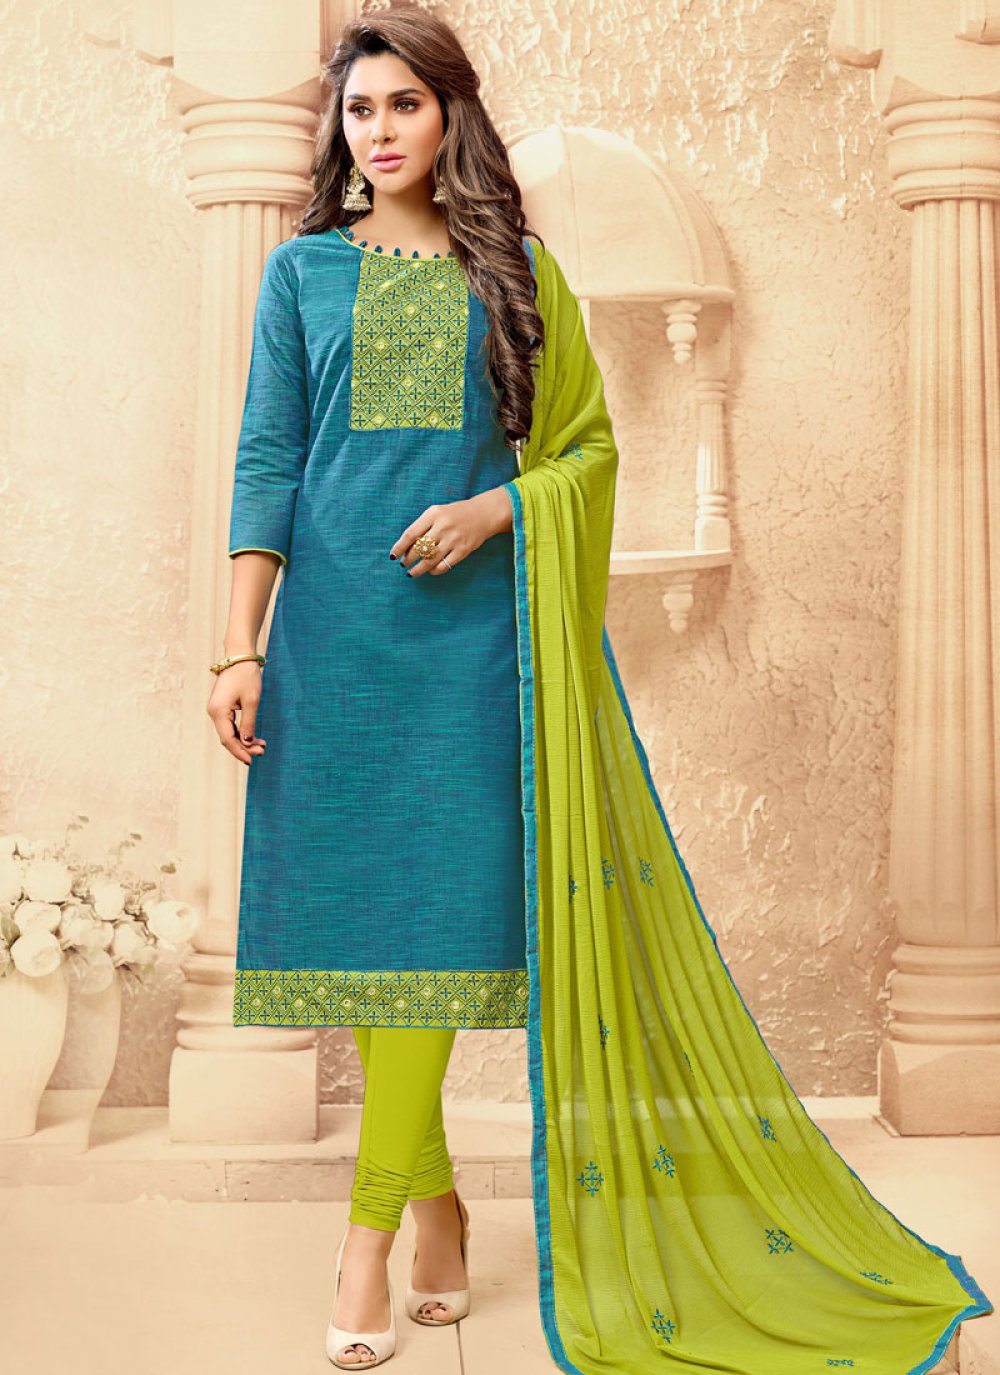 Buy Multicolor Handloom Cotton Printed Suit Online at Best Price | Cbazaar